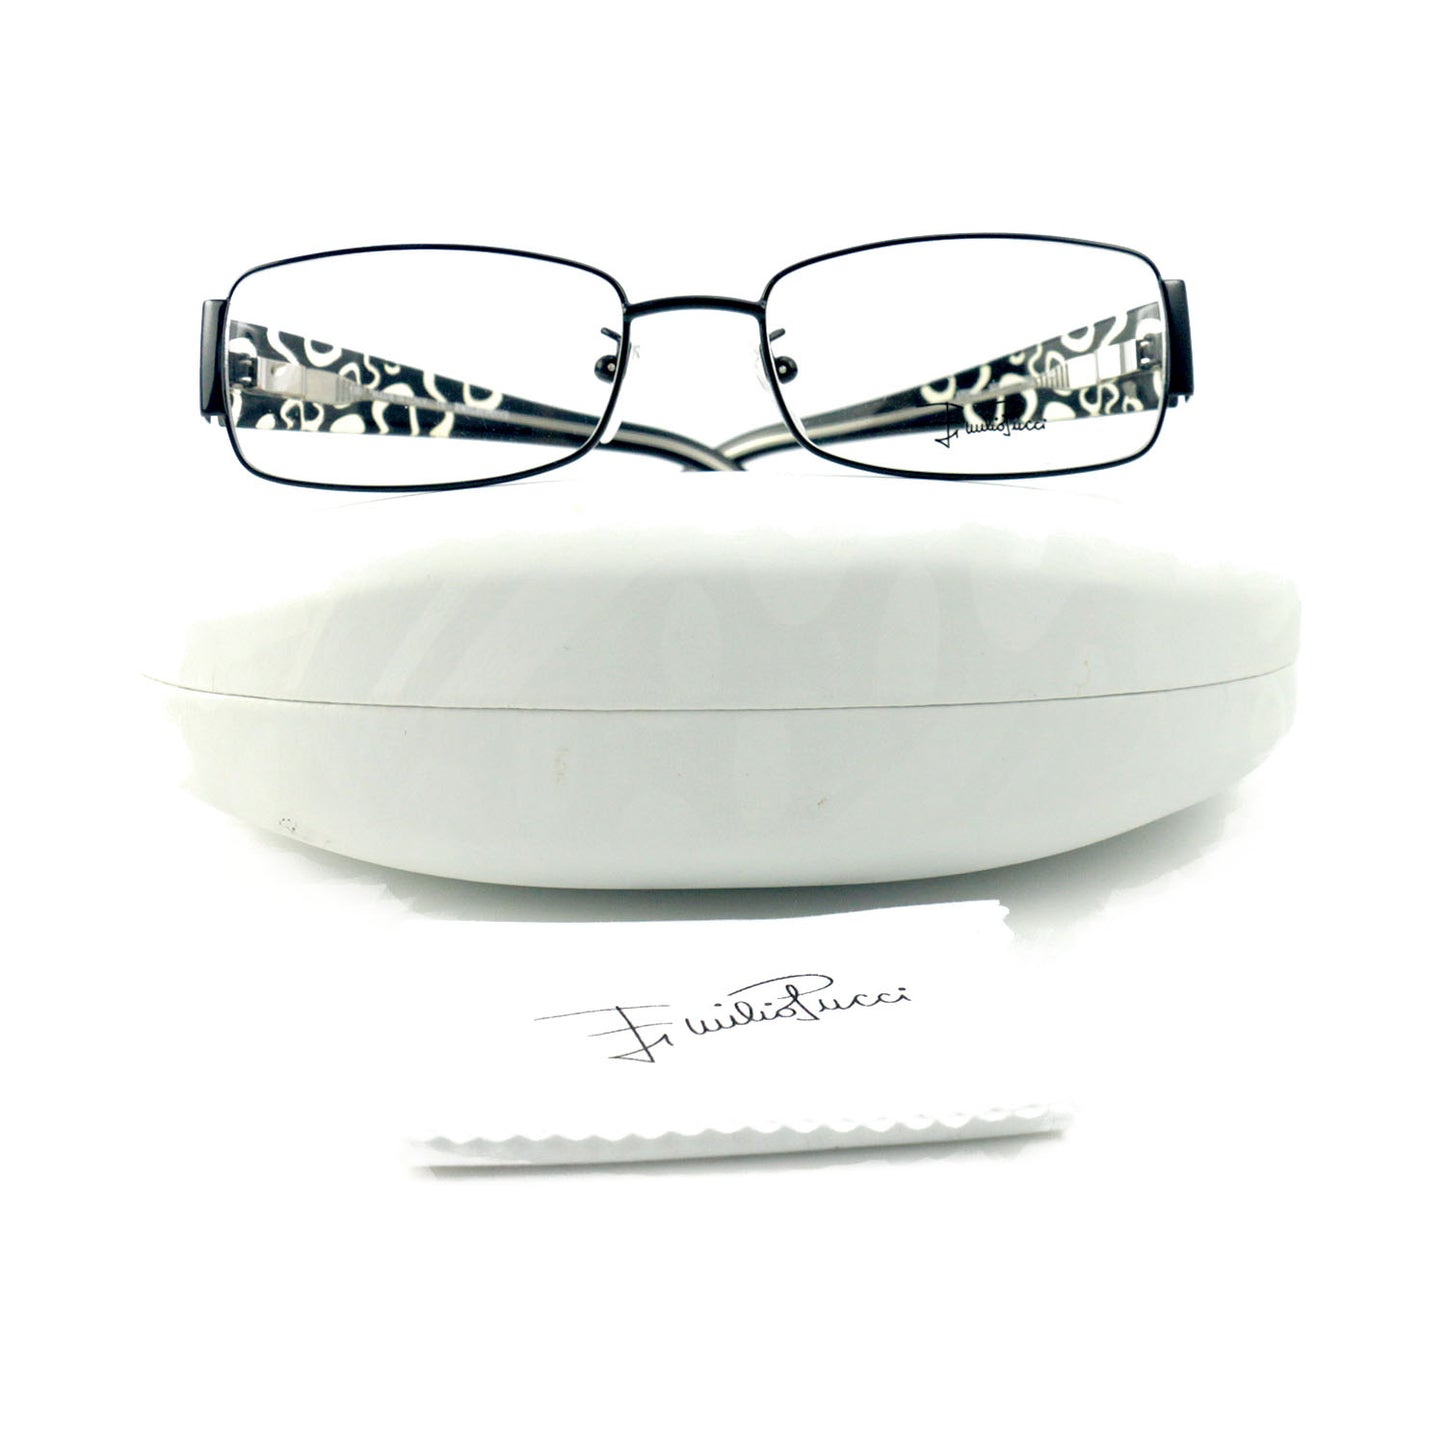 Emilio Pucci Womens Eyeglasses EP2135 001 Black 53 17 130 Frames Rectangle